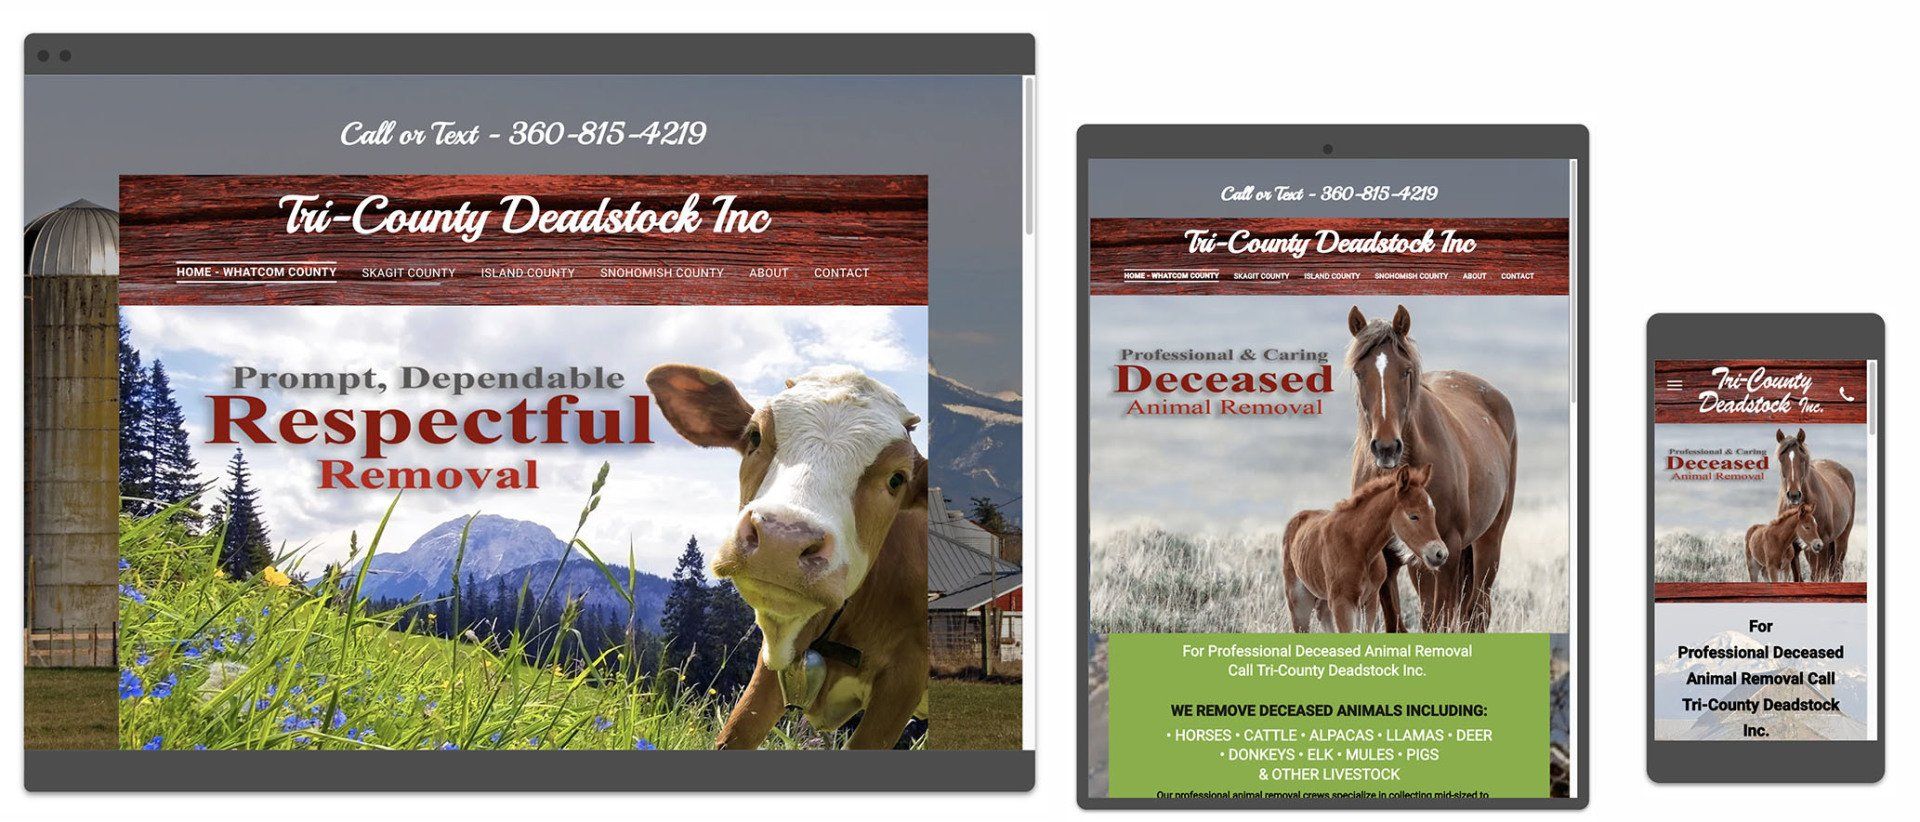 Tri-County Deadstock Inc  website image